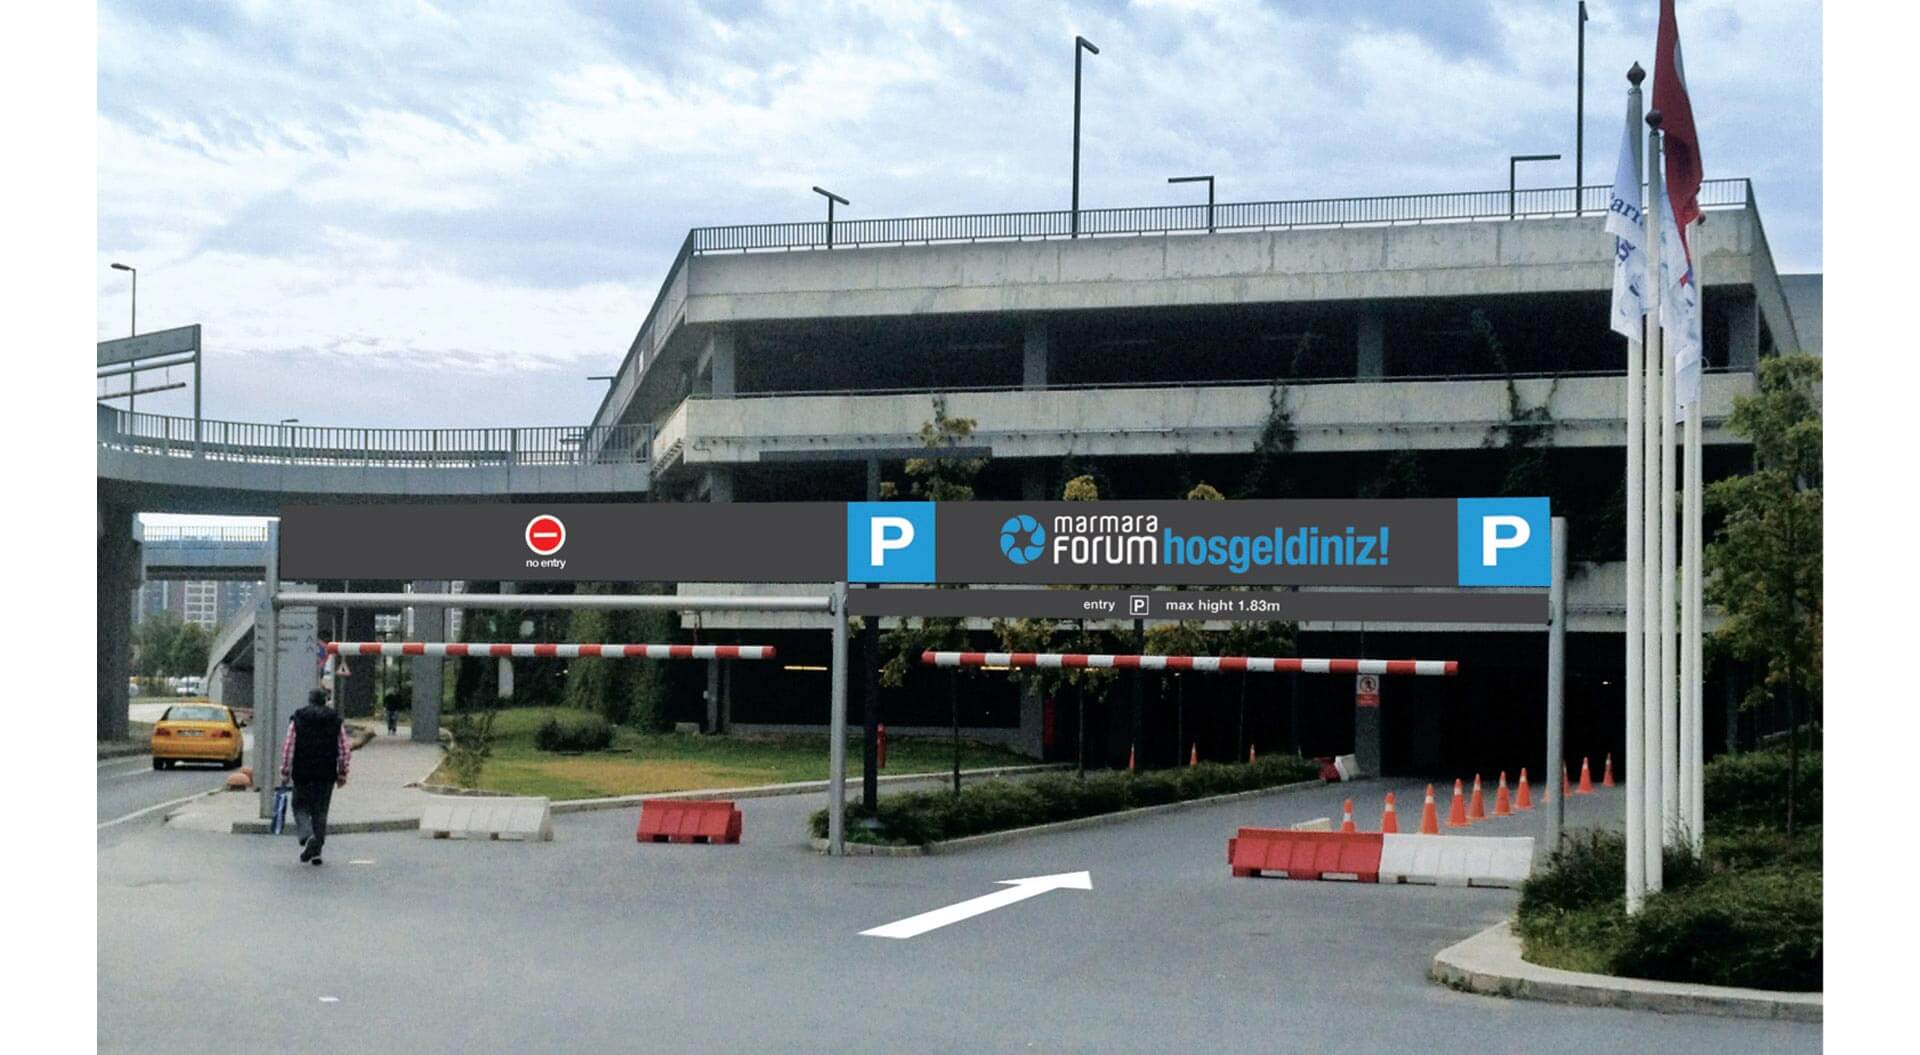 Marmara Forum shopping mall Istanbul car park entrance navigation and branding system